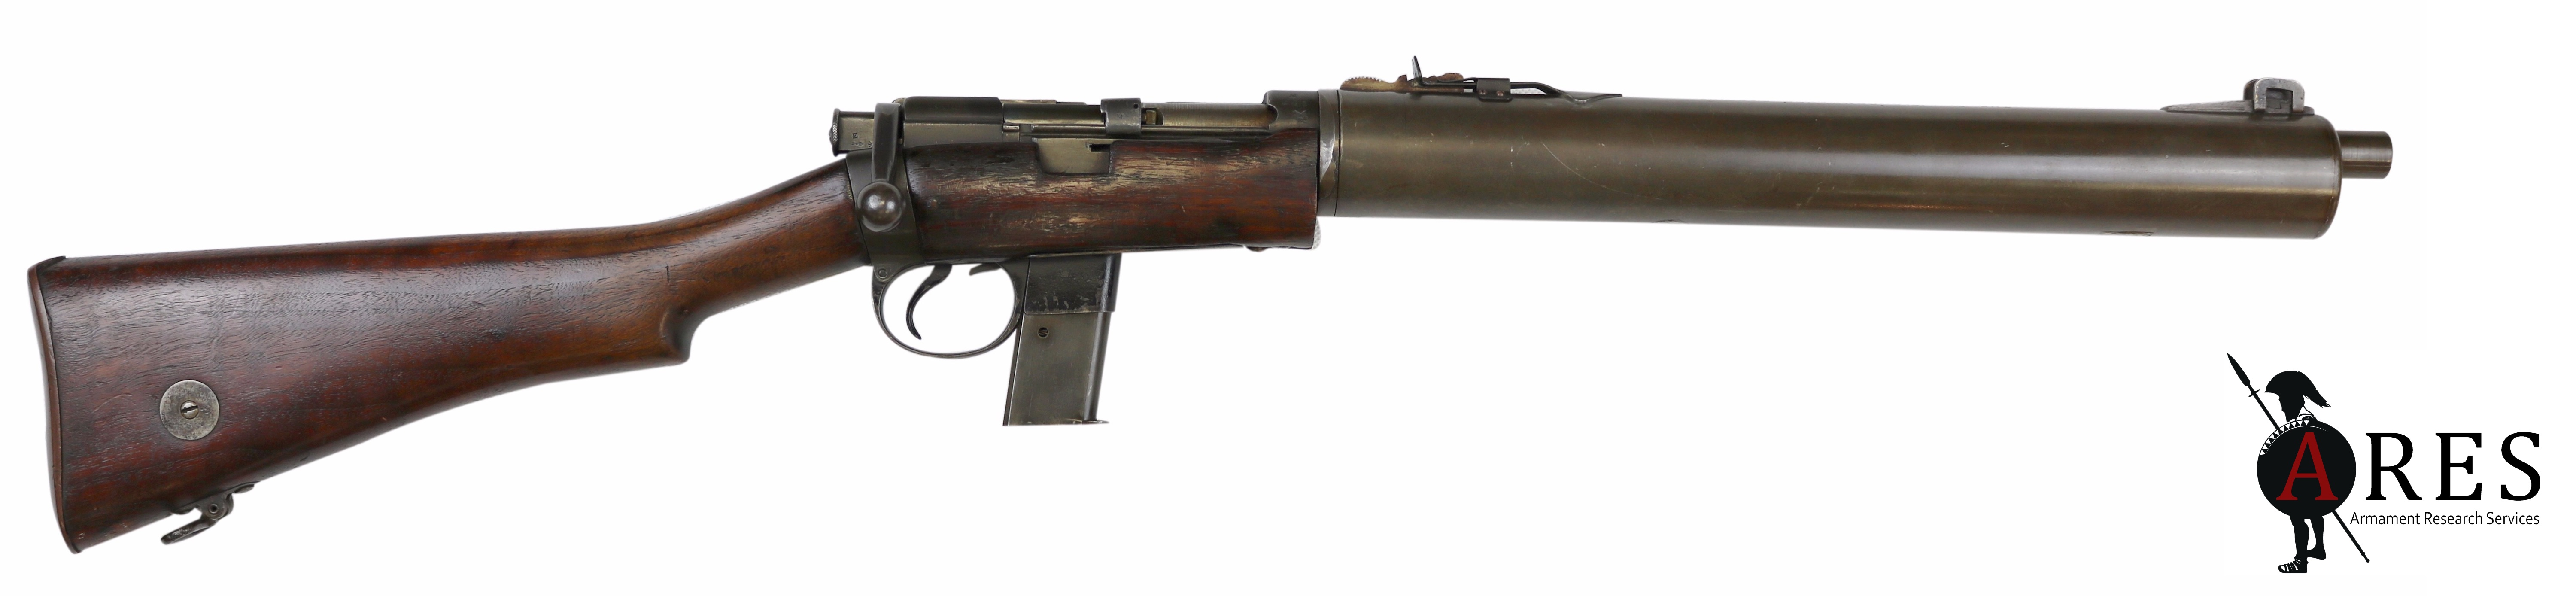 RUBICON STEEL L/48 GUN BARREL WITH MUZZLE BRAKE WORLD WAR 2 BOLT ACTION 